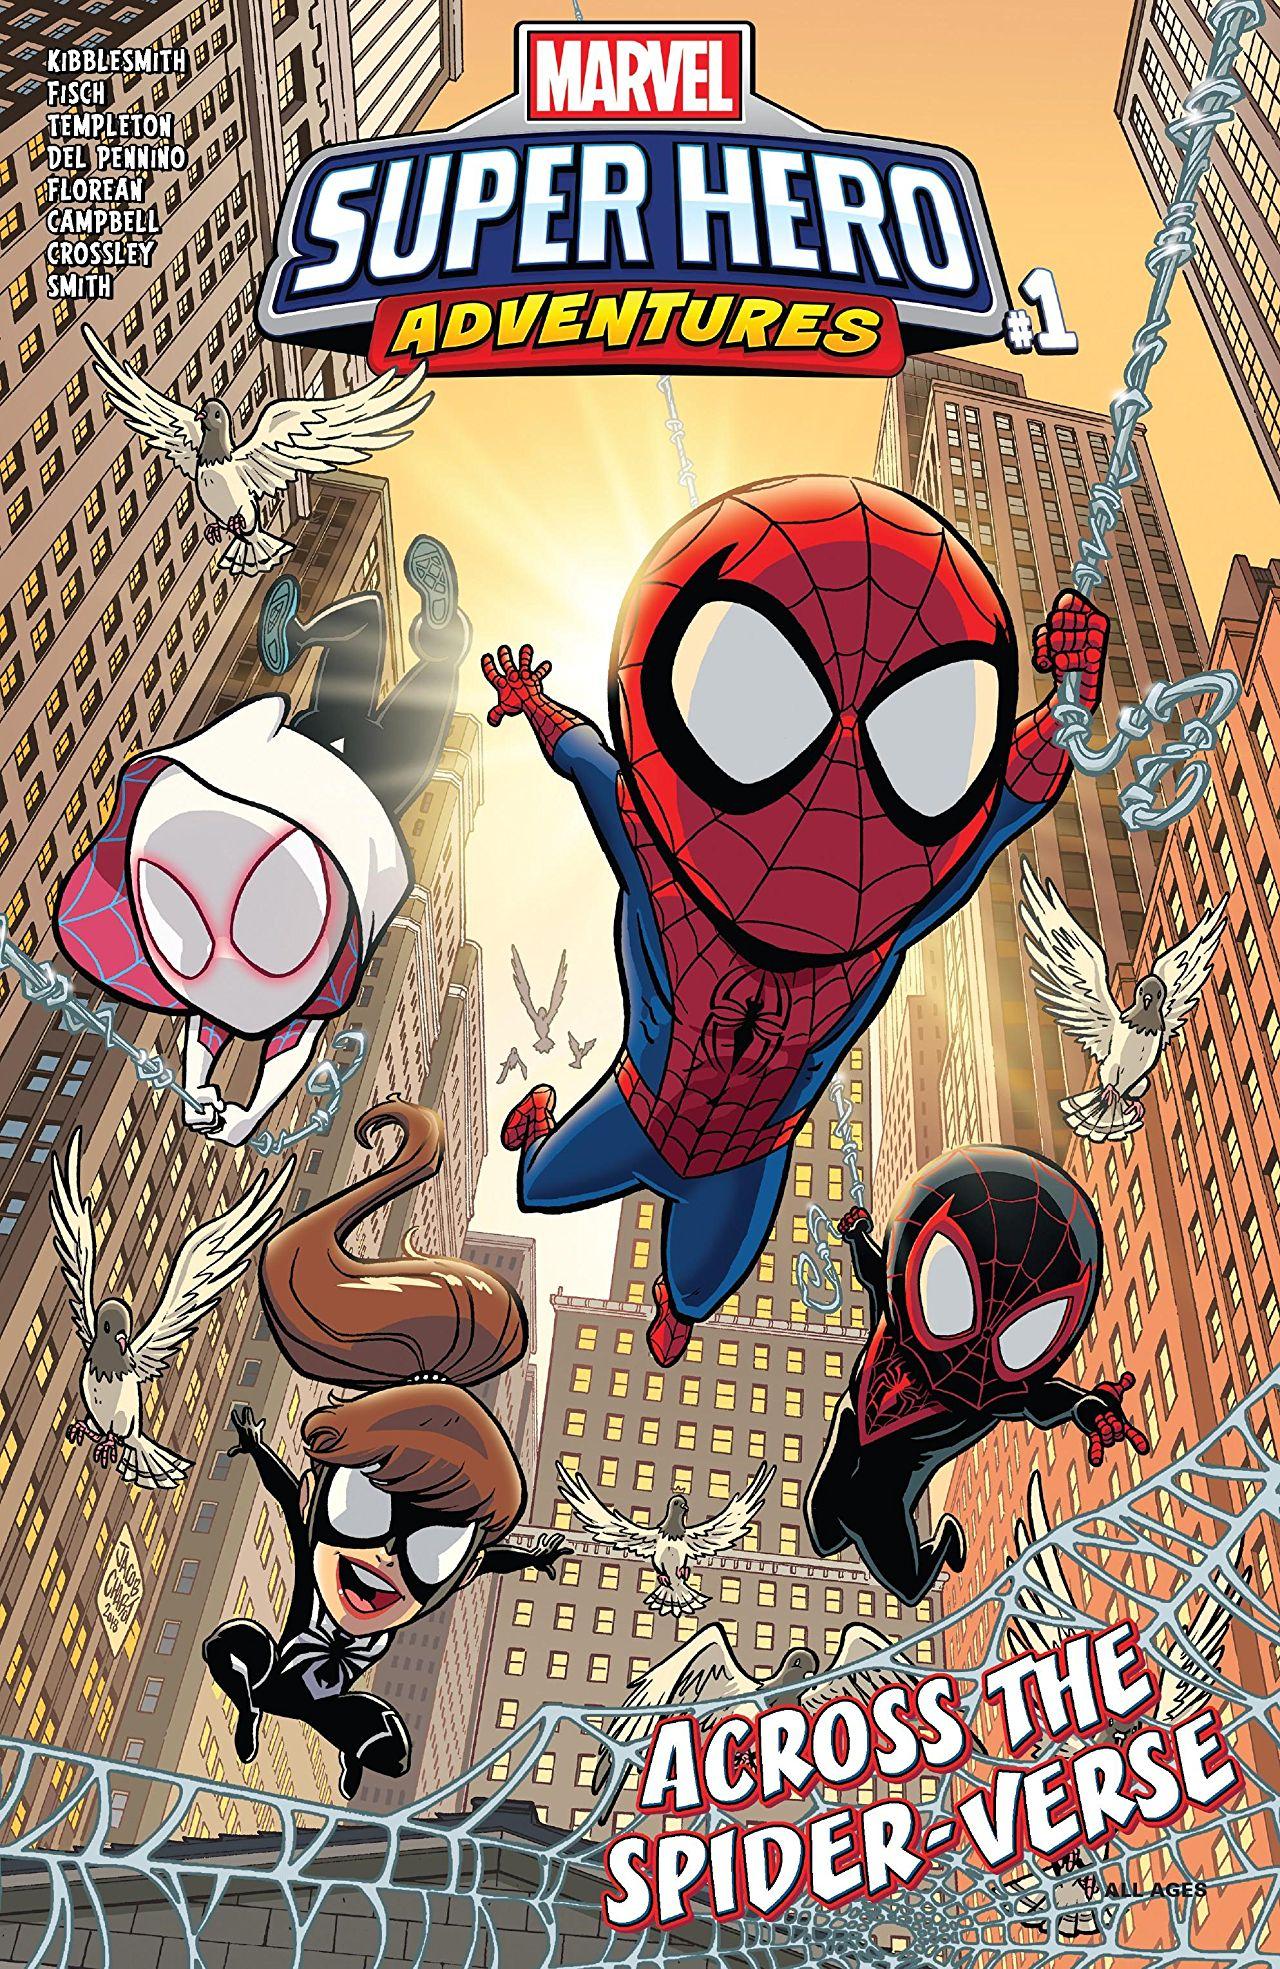 Marvel Super Hero Adventures: Spider-Man - Across the Spider-Verse Vol. 1 #1